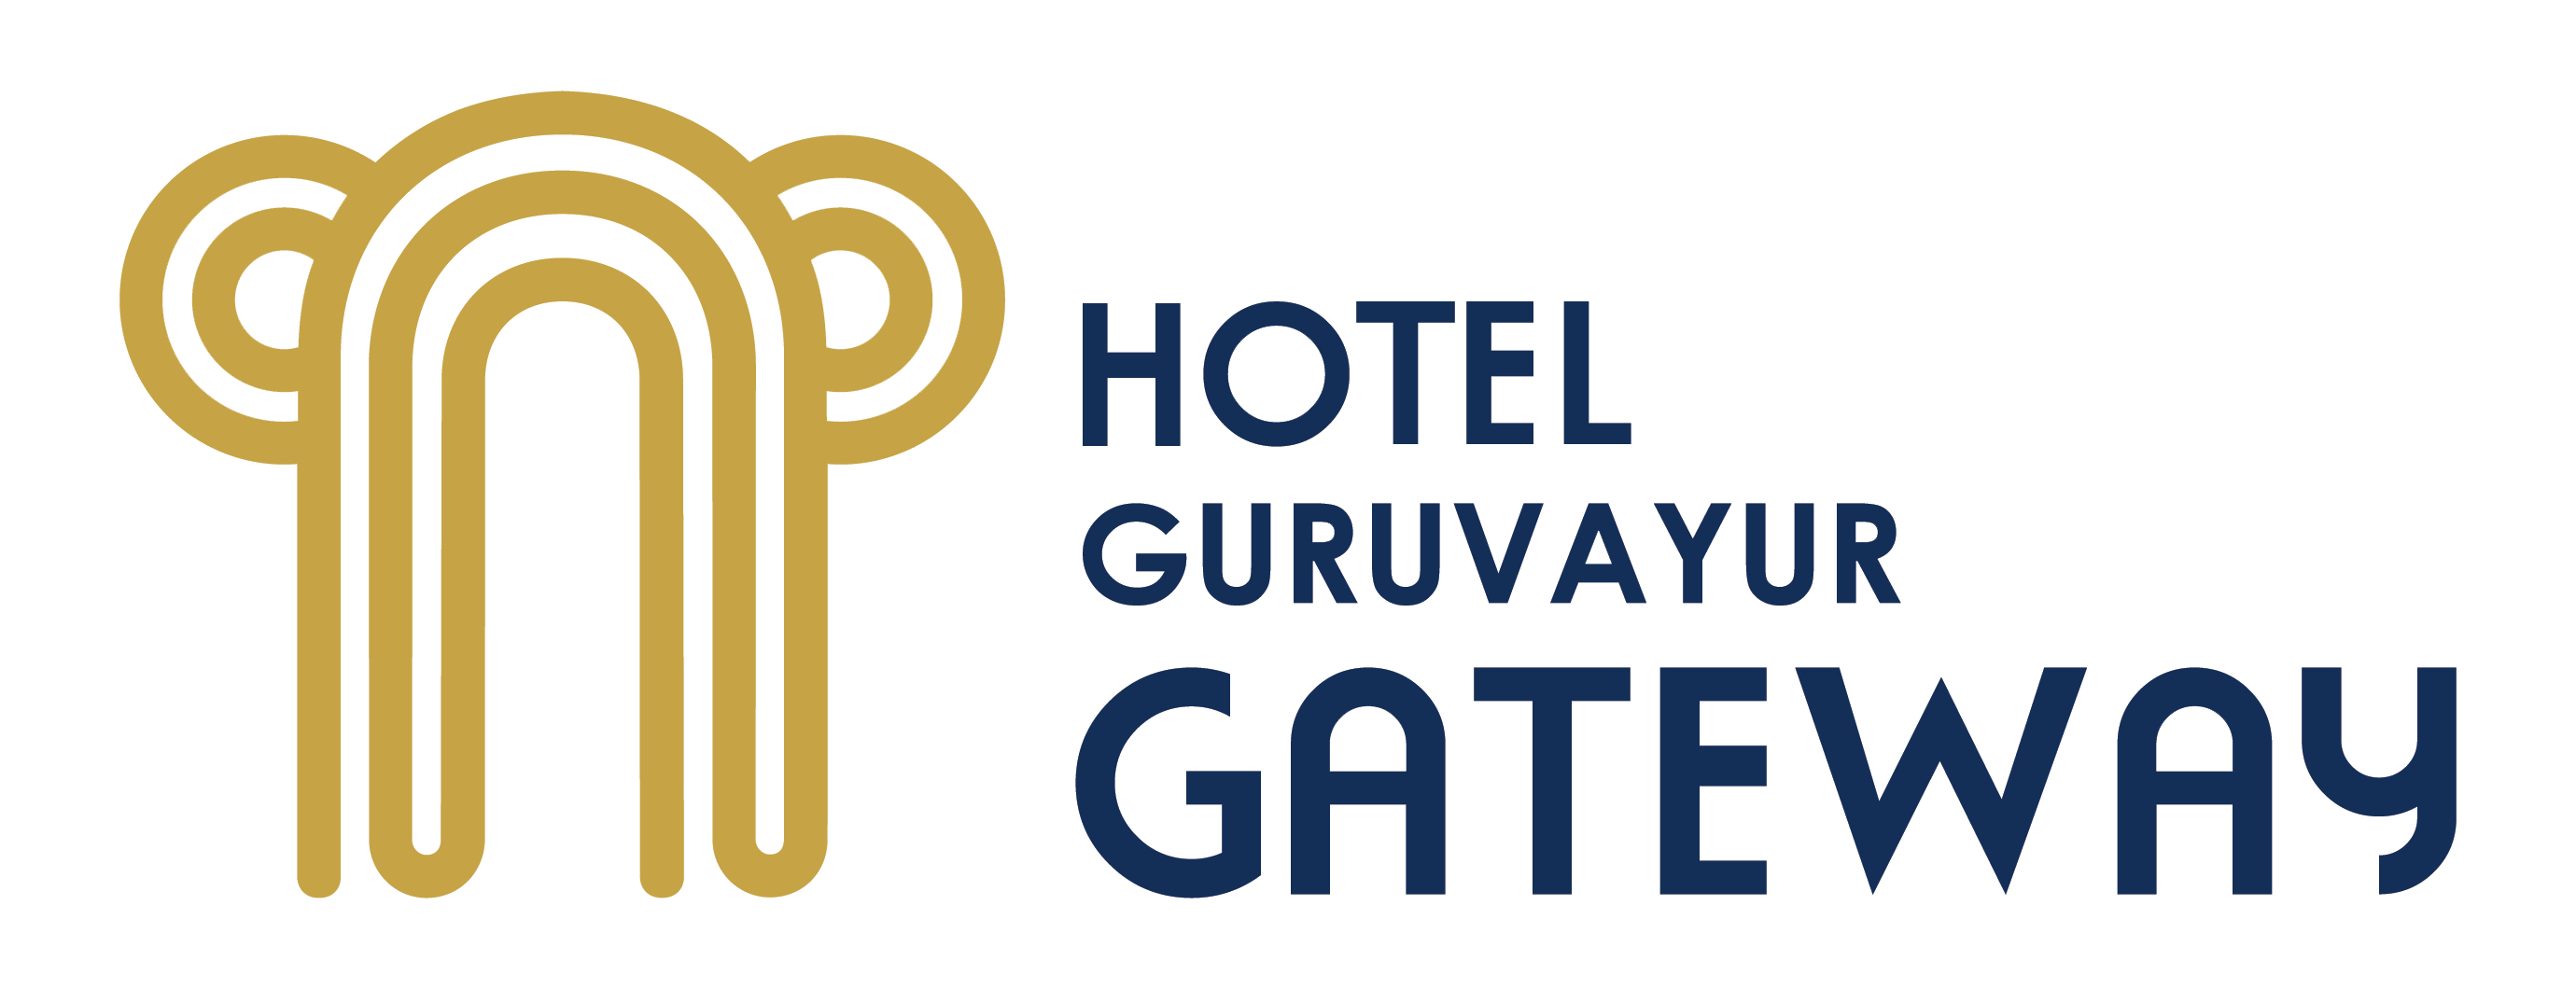 Gateway Hotels Logo - Best Hotels in Guruvayur. Budget Hotels In Guruvayur Near Temple